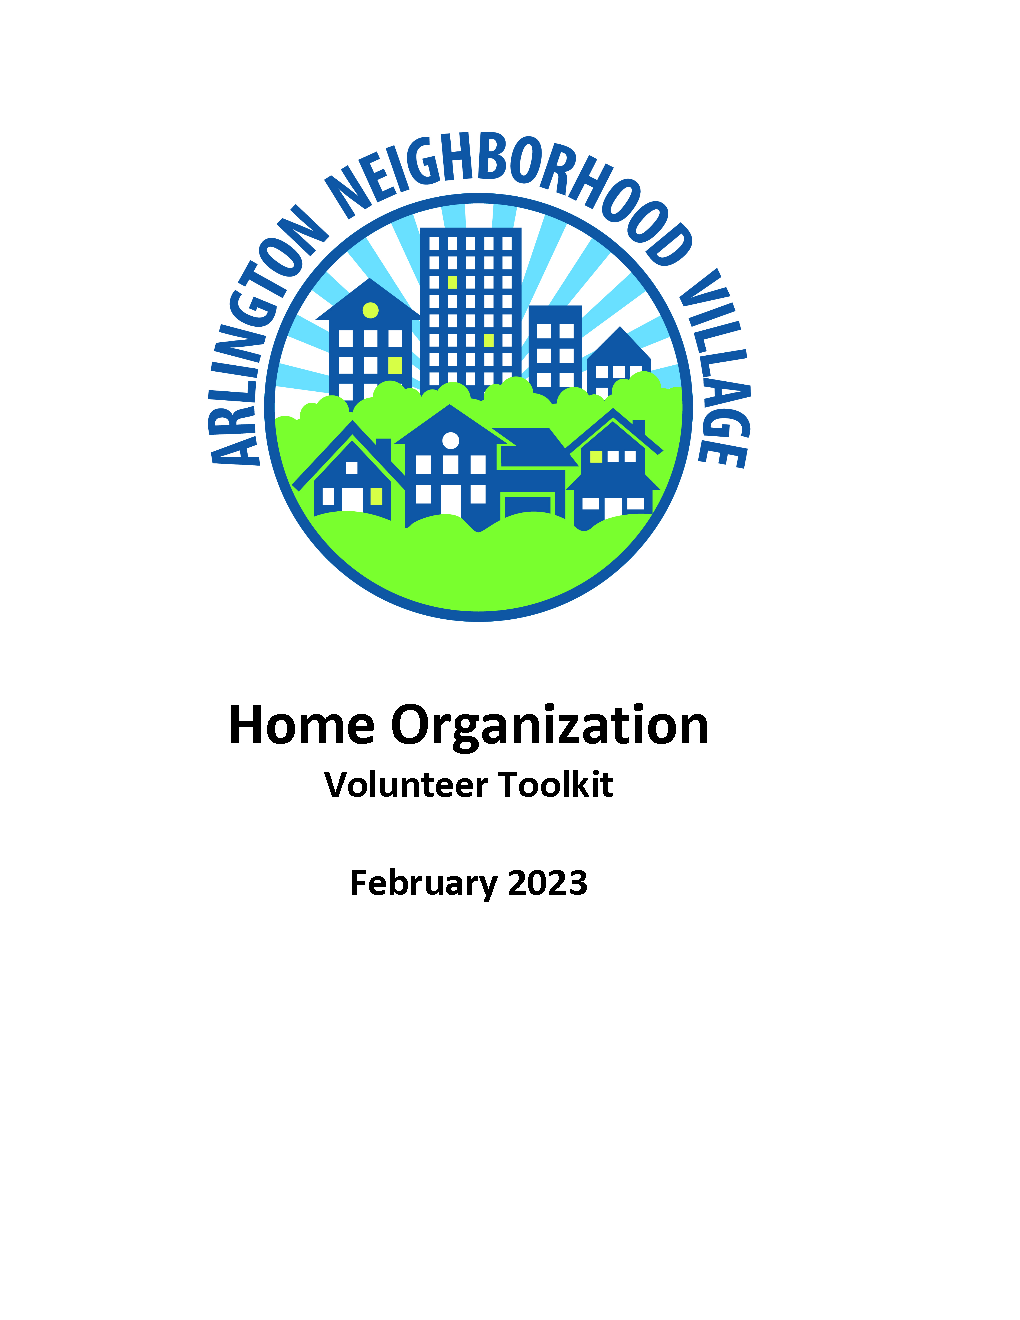 Home Organization Volunteer Toolkit